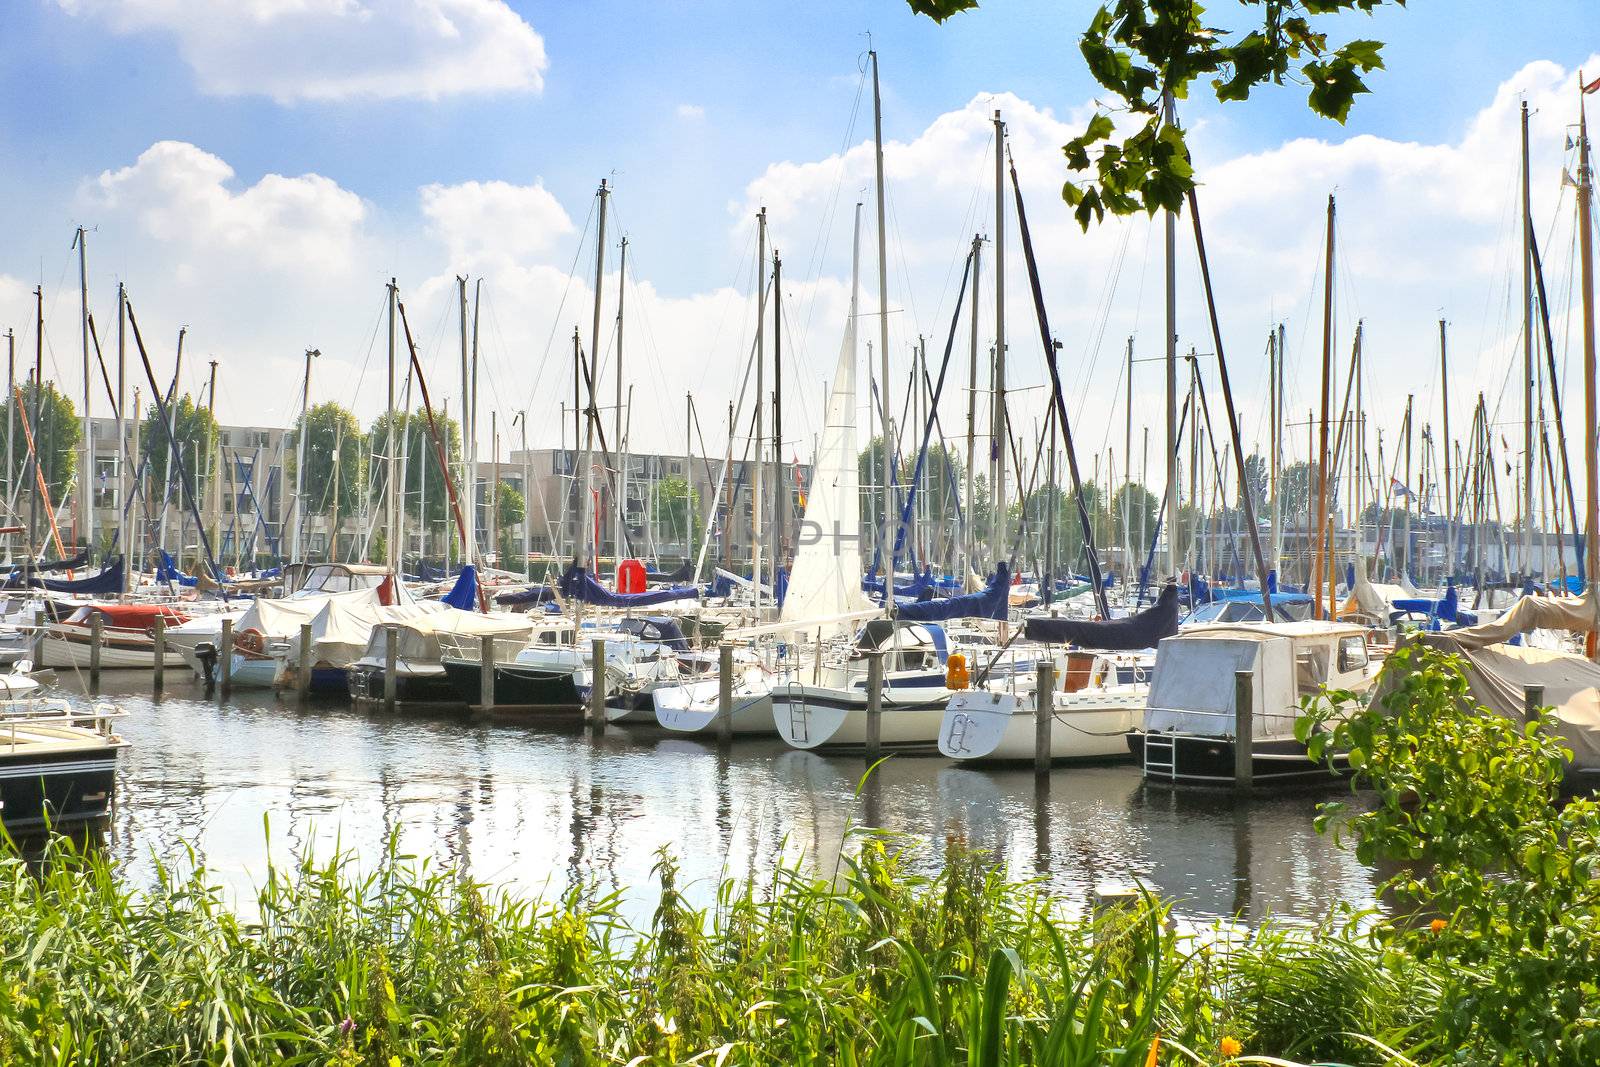 Boats at the marina Huizen. Netherlands by NickNick